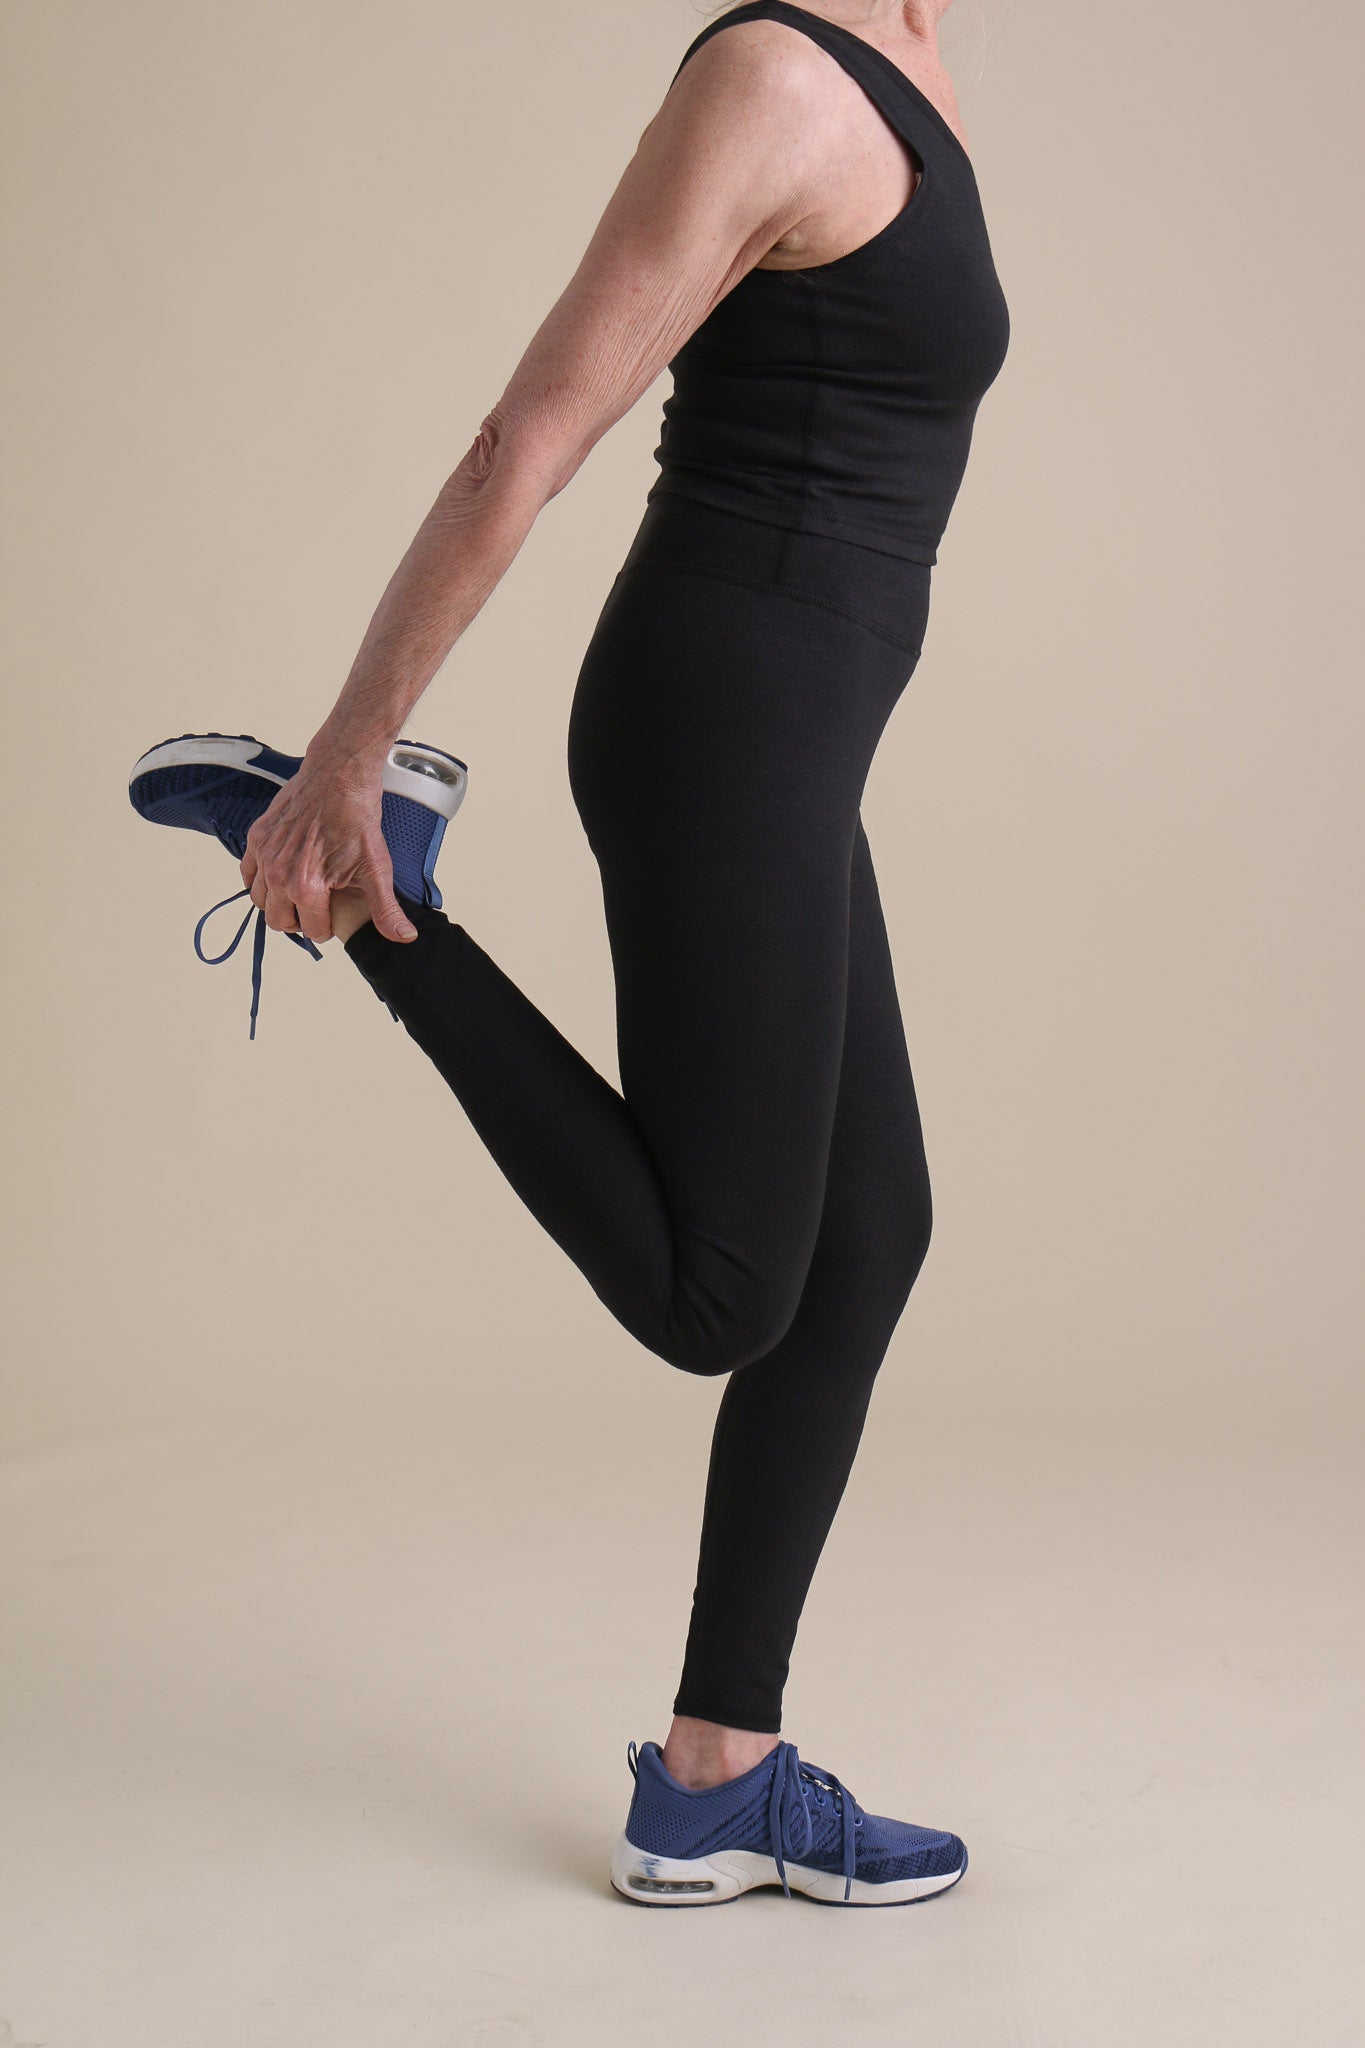 New Lu 06 Yoga Pants Sports Leggings Women Stretch Quick Dry Black